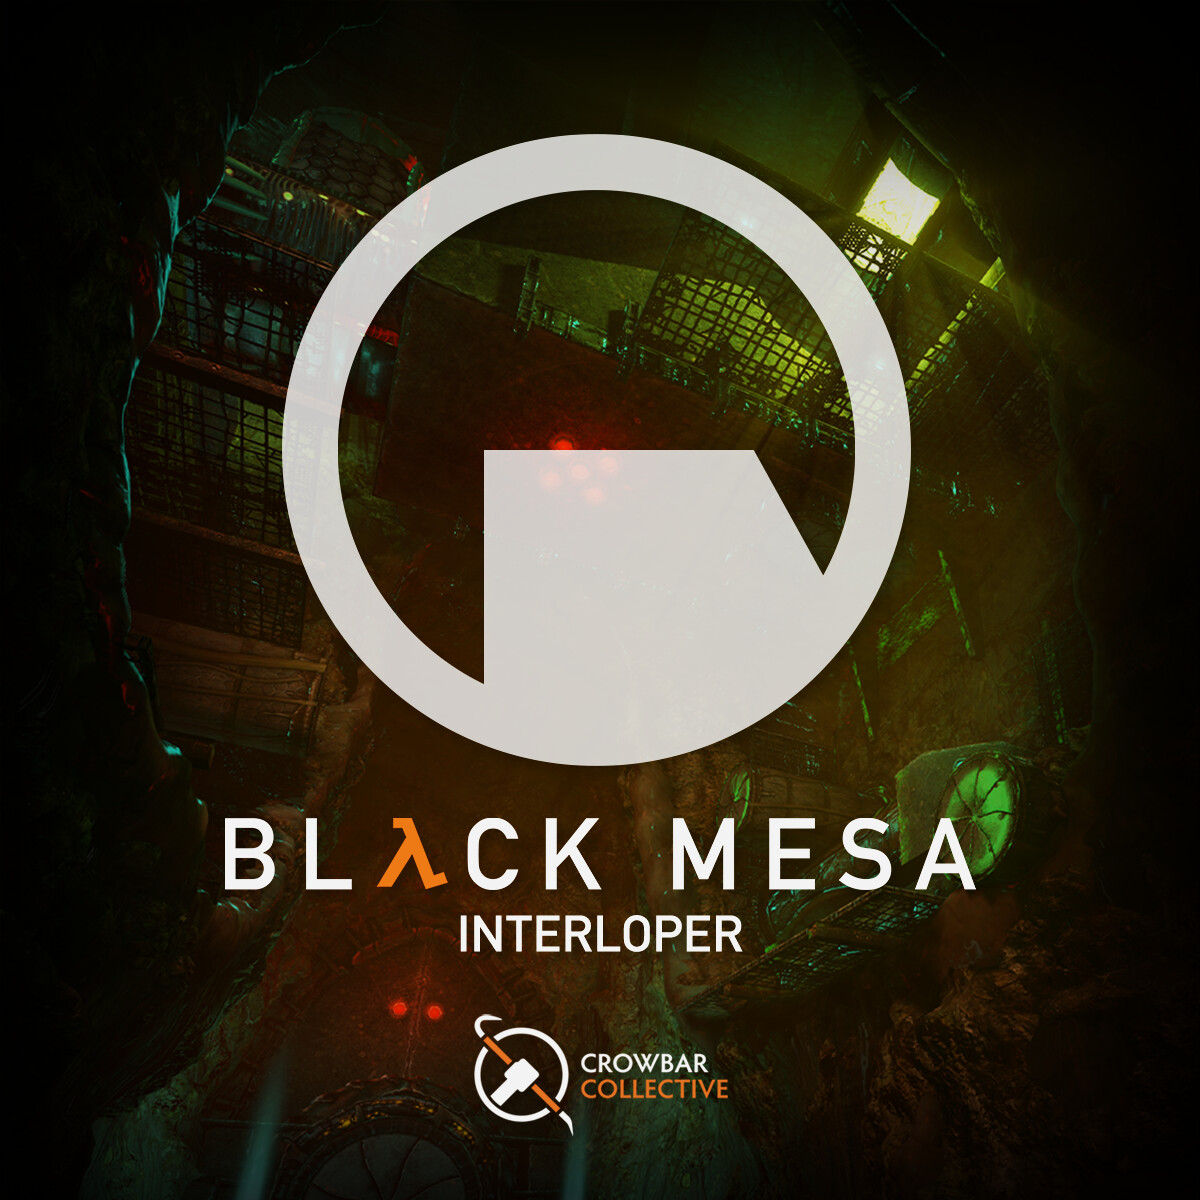 Black Mesa — Interloper Environment Art